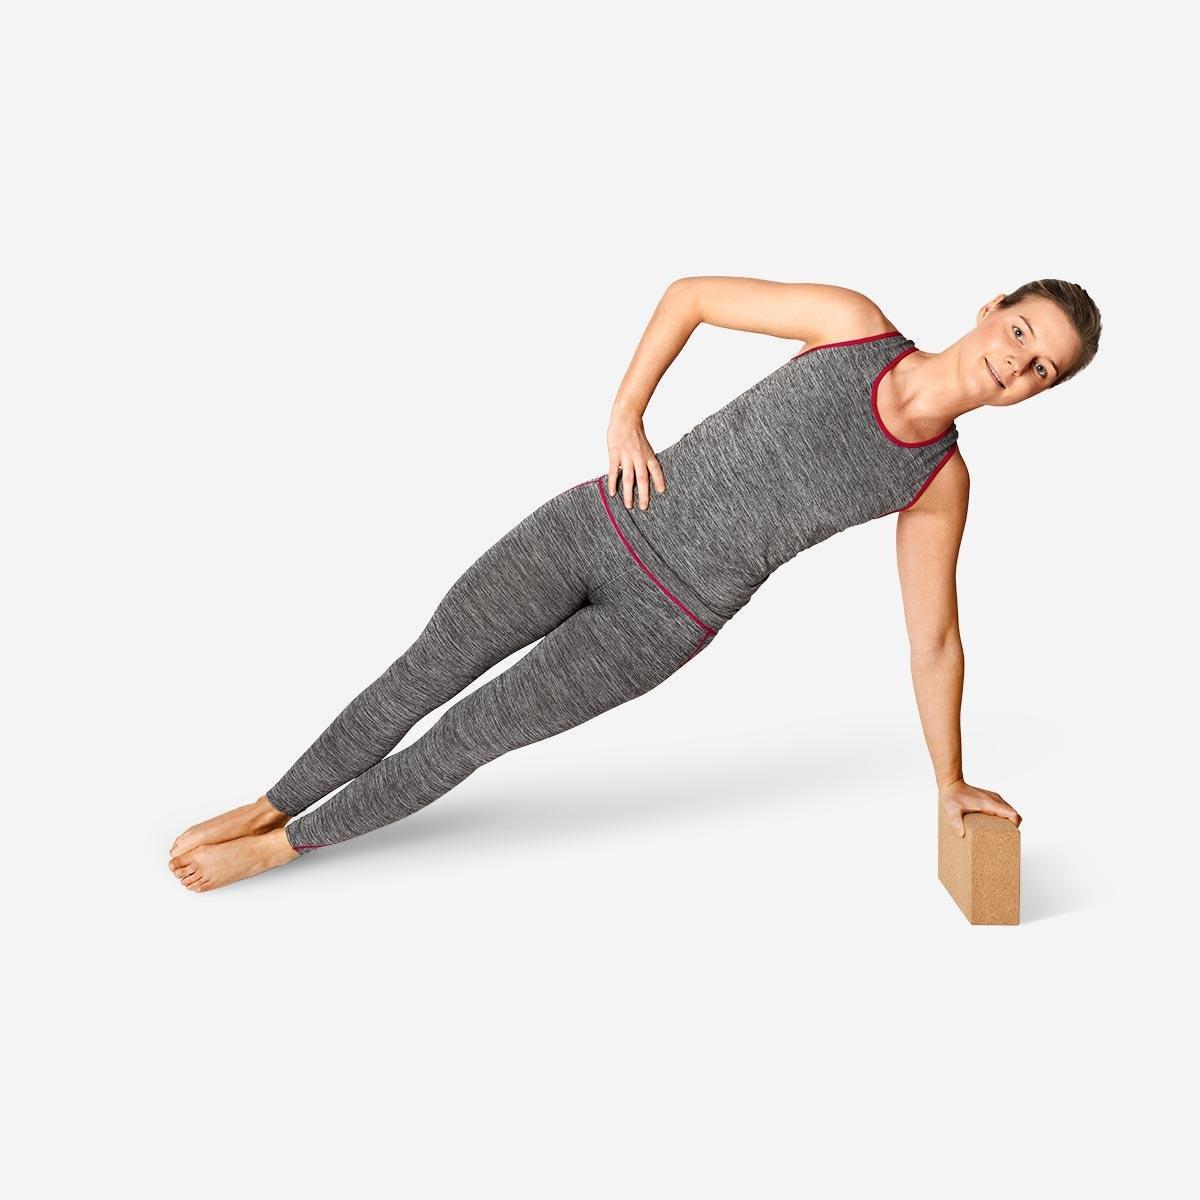 Wooden yoga block